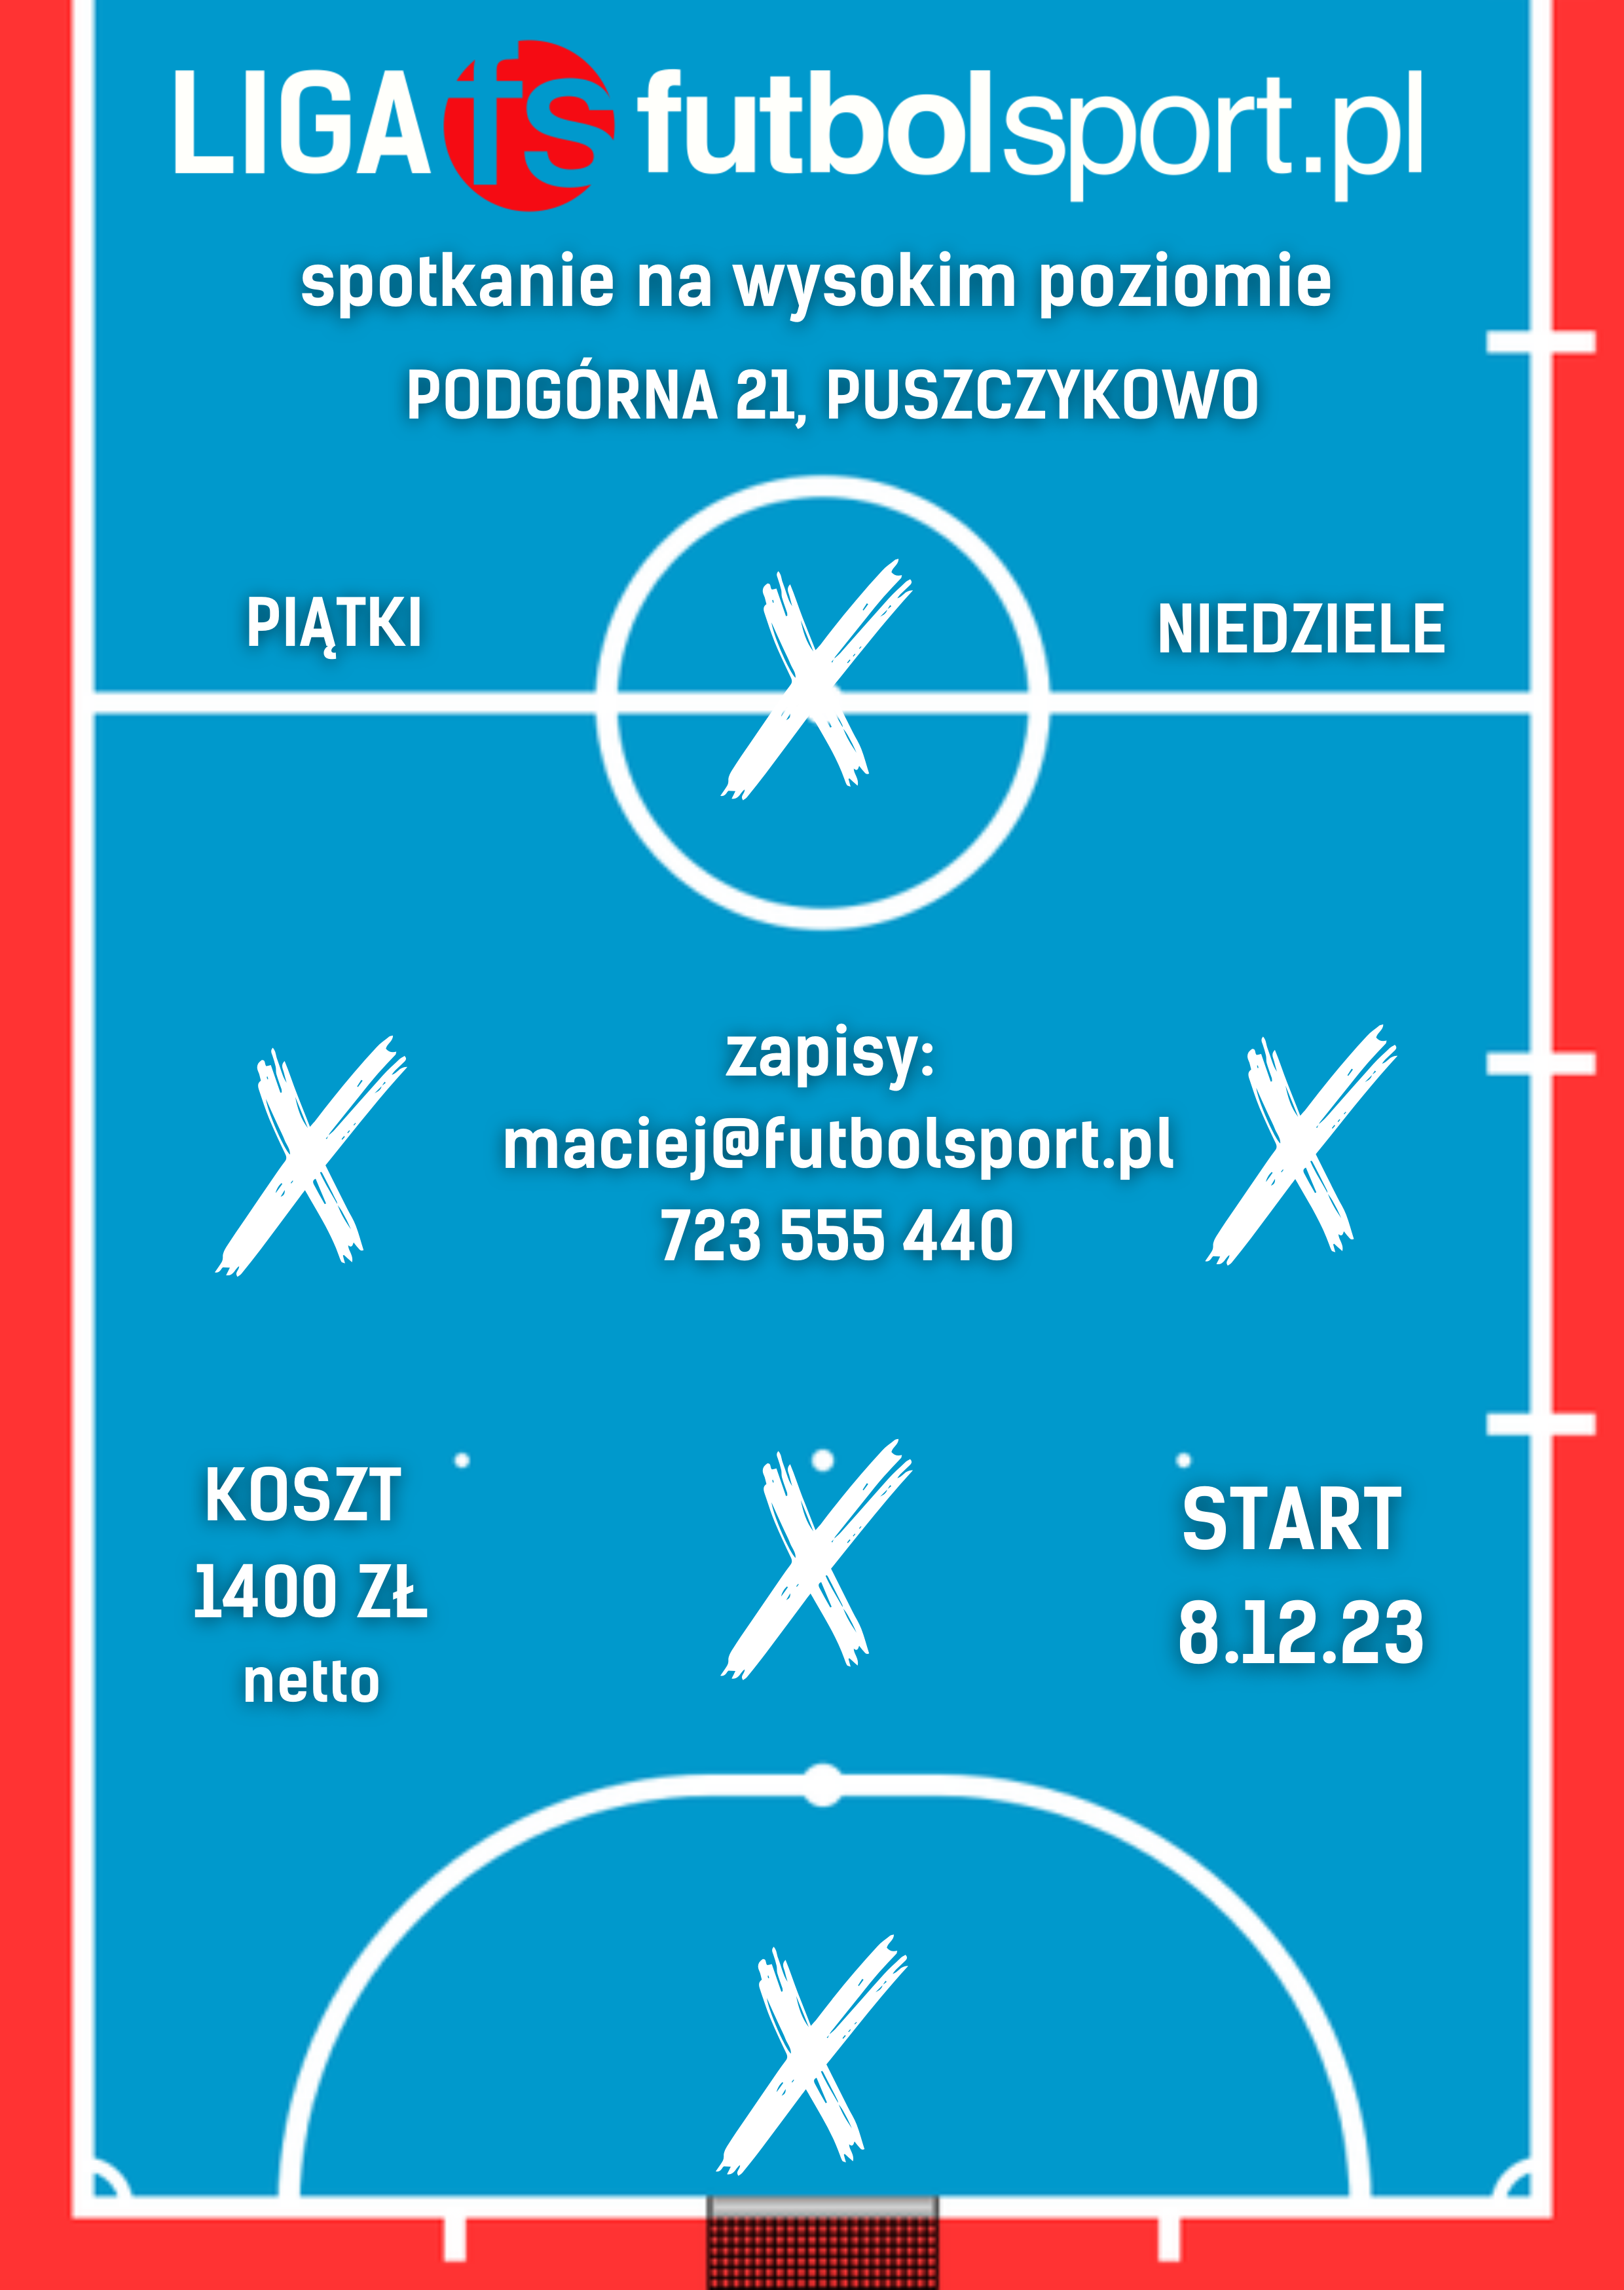 8 grudnia start ligi halowej futbolsport.pl